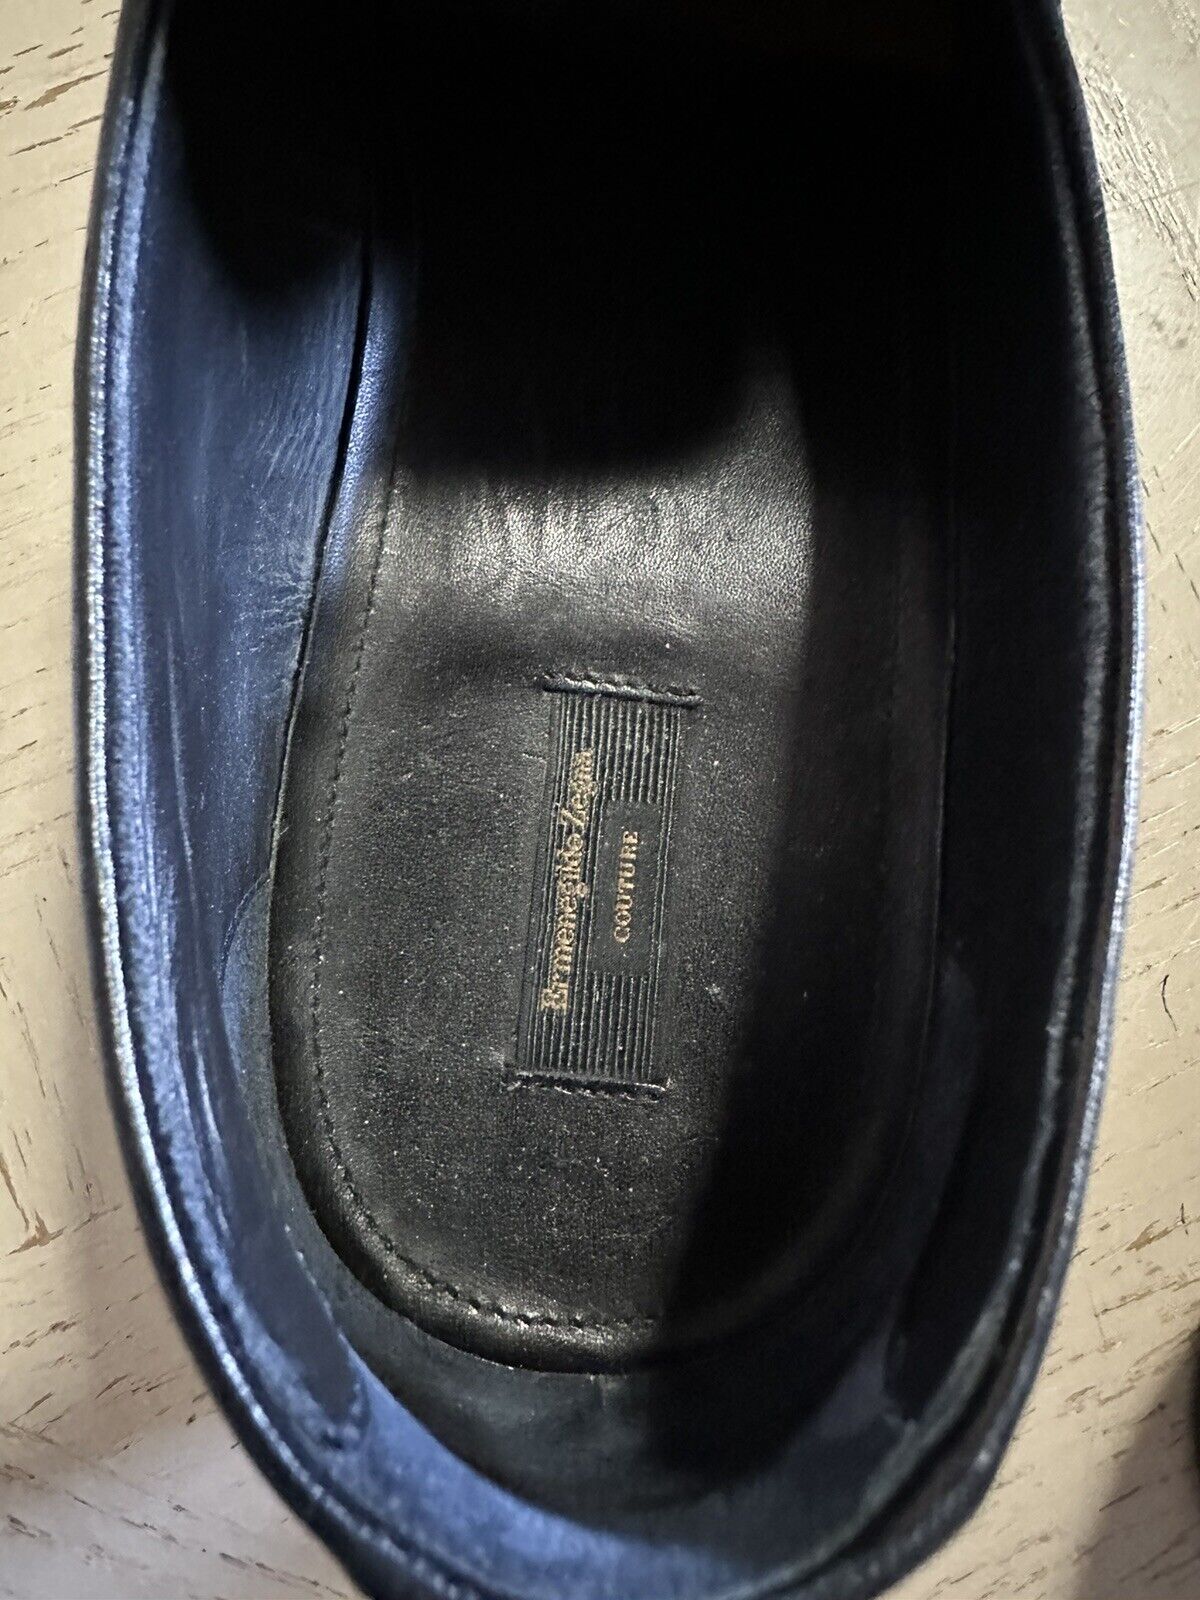 $1395 Ermenegildo Zegna Couture Leather Loafers Shoes Black 10 US/43 Eu Italy